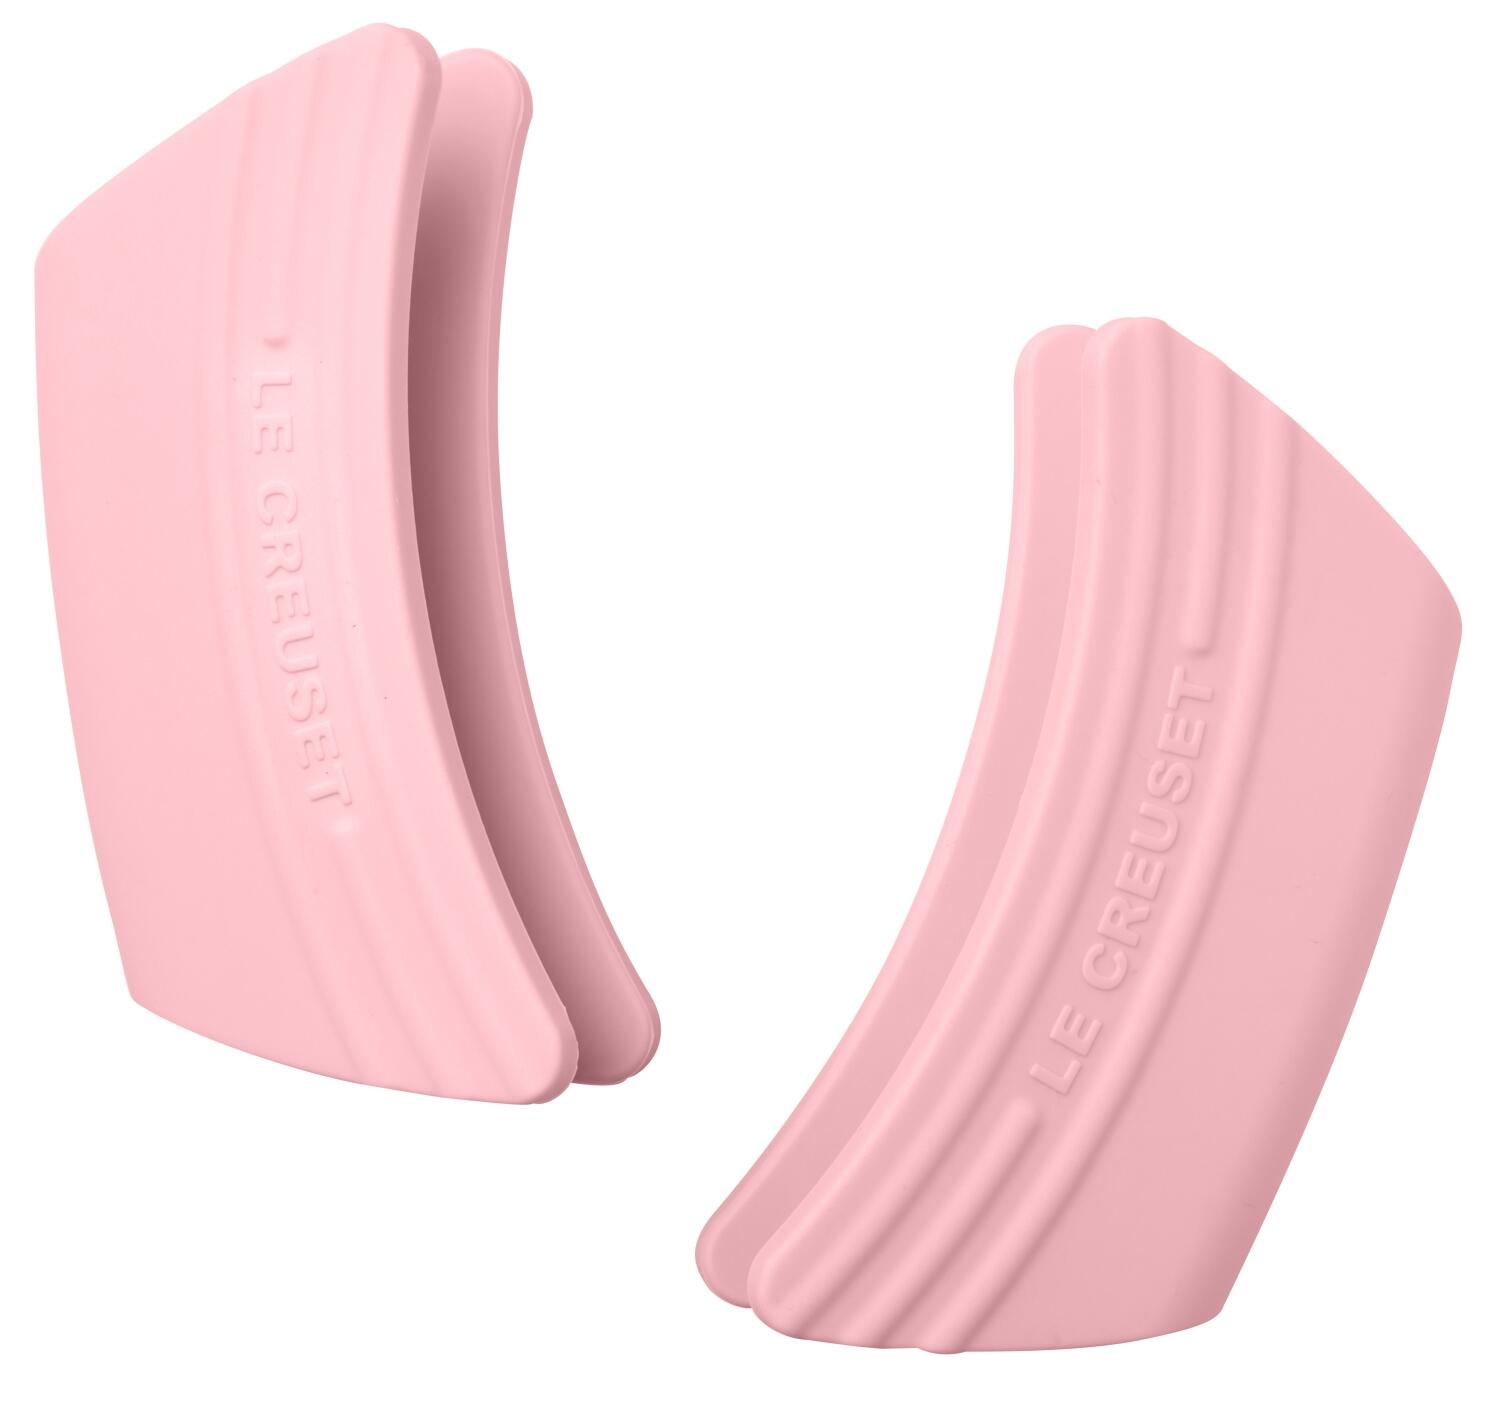 Le Creuset Topf-Griffschutz aus Silikon in shell pink, 2er Set